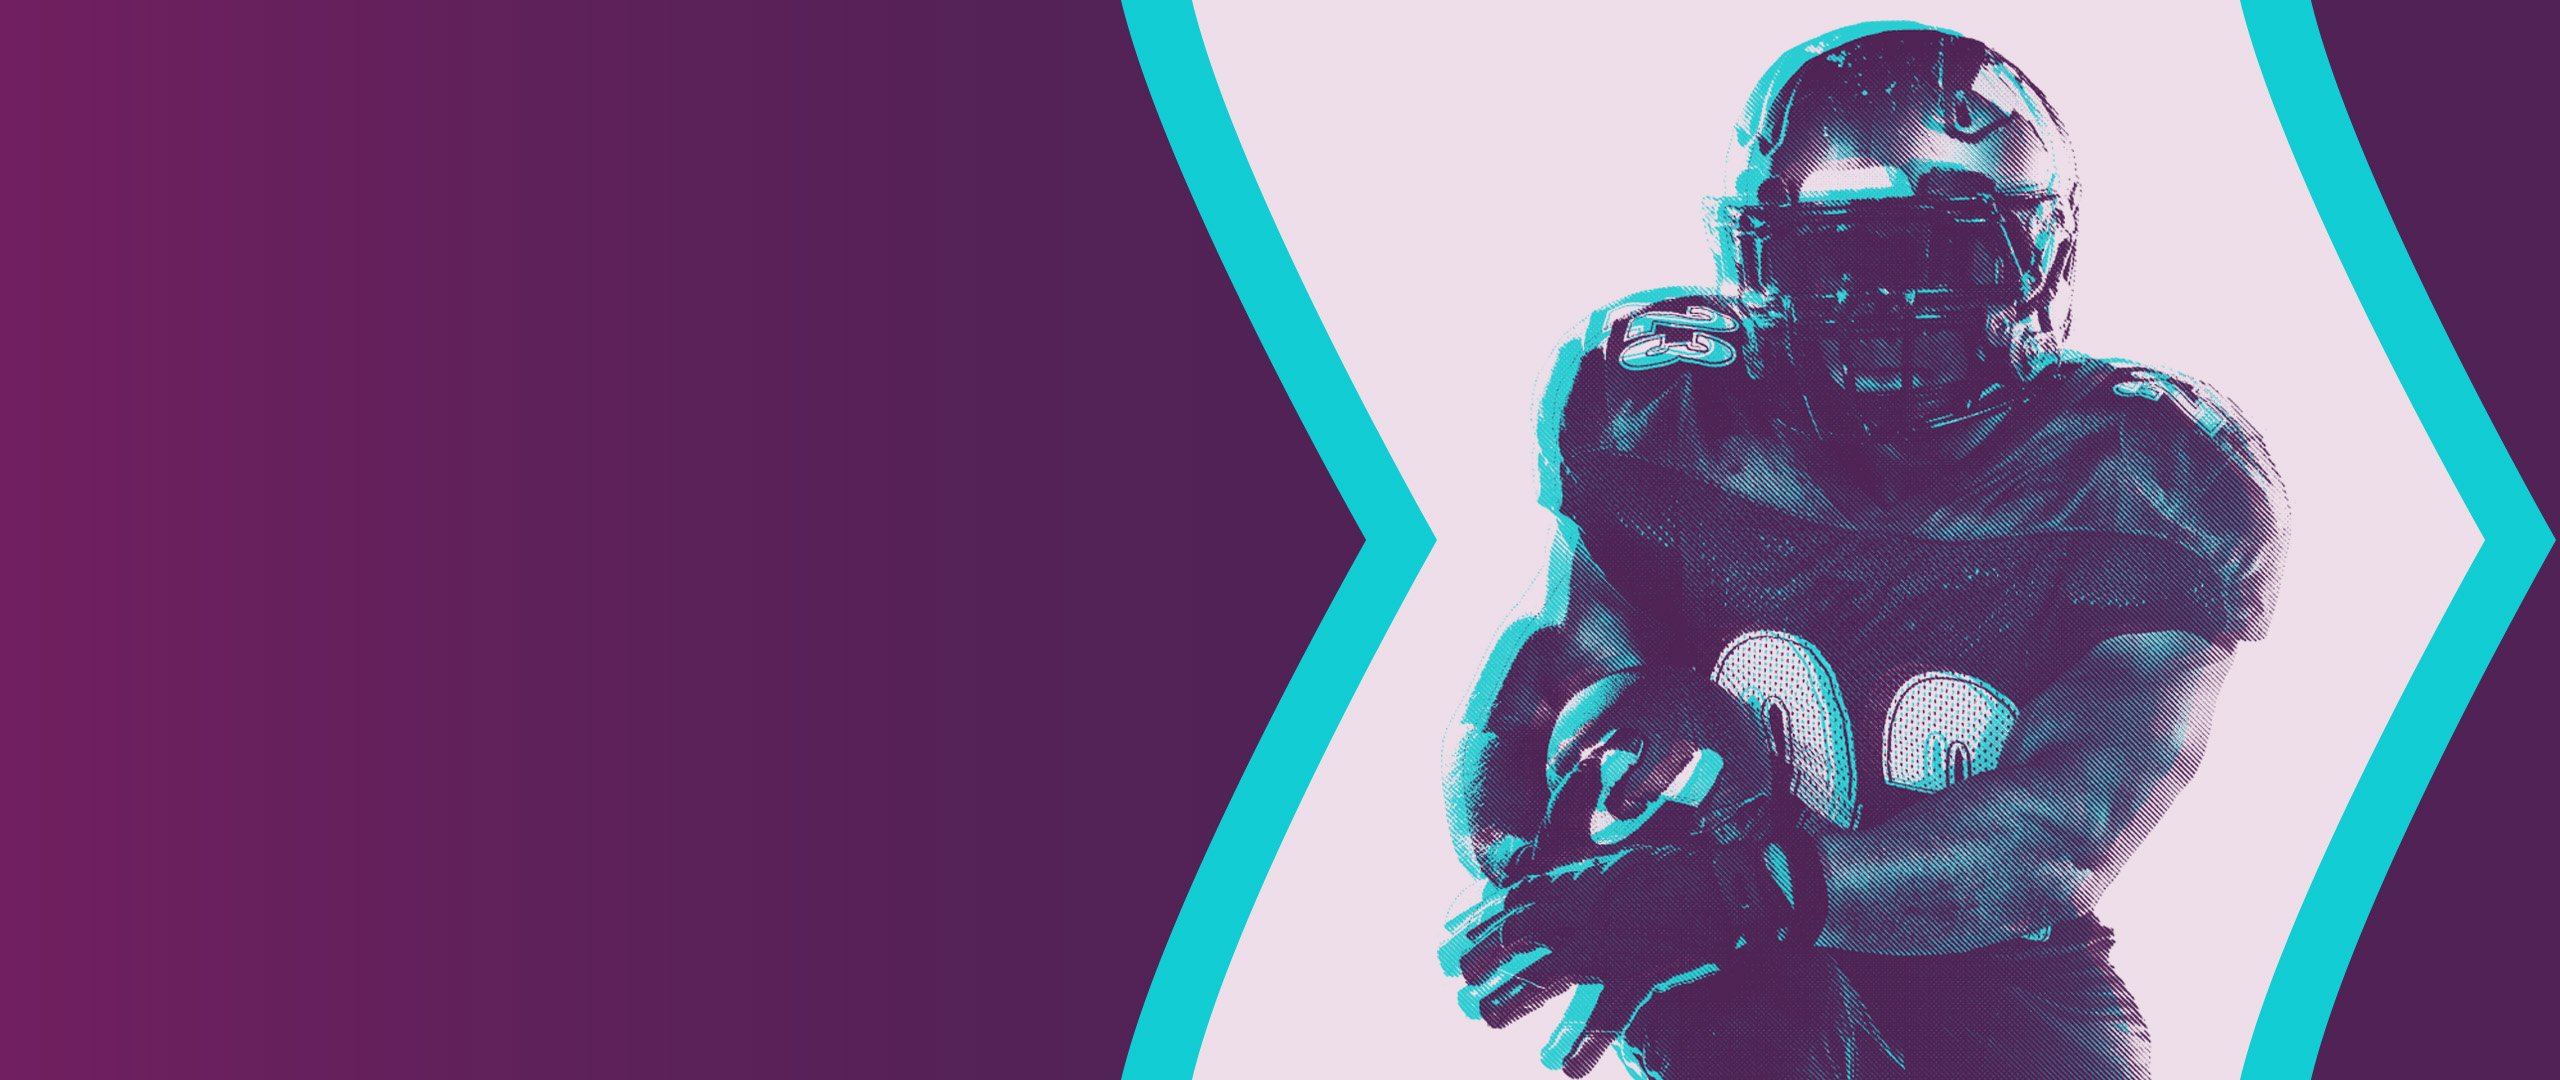 Skrill Bet online US, NFL palyer on purple background